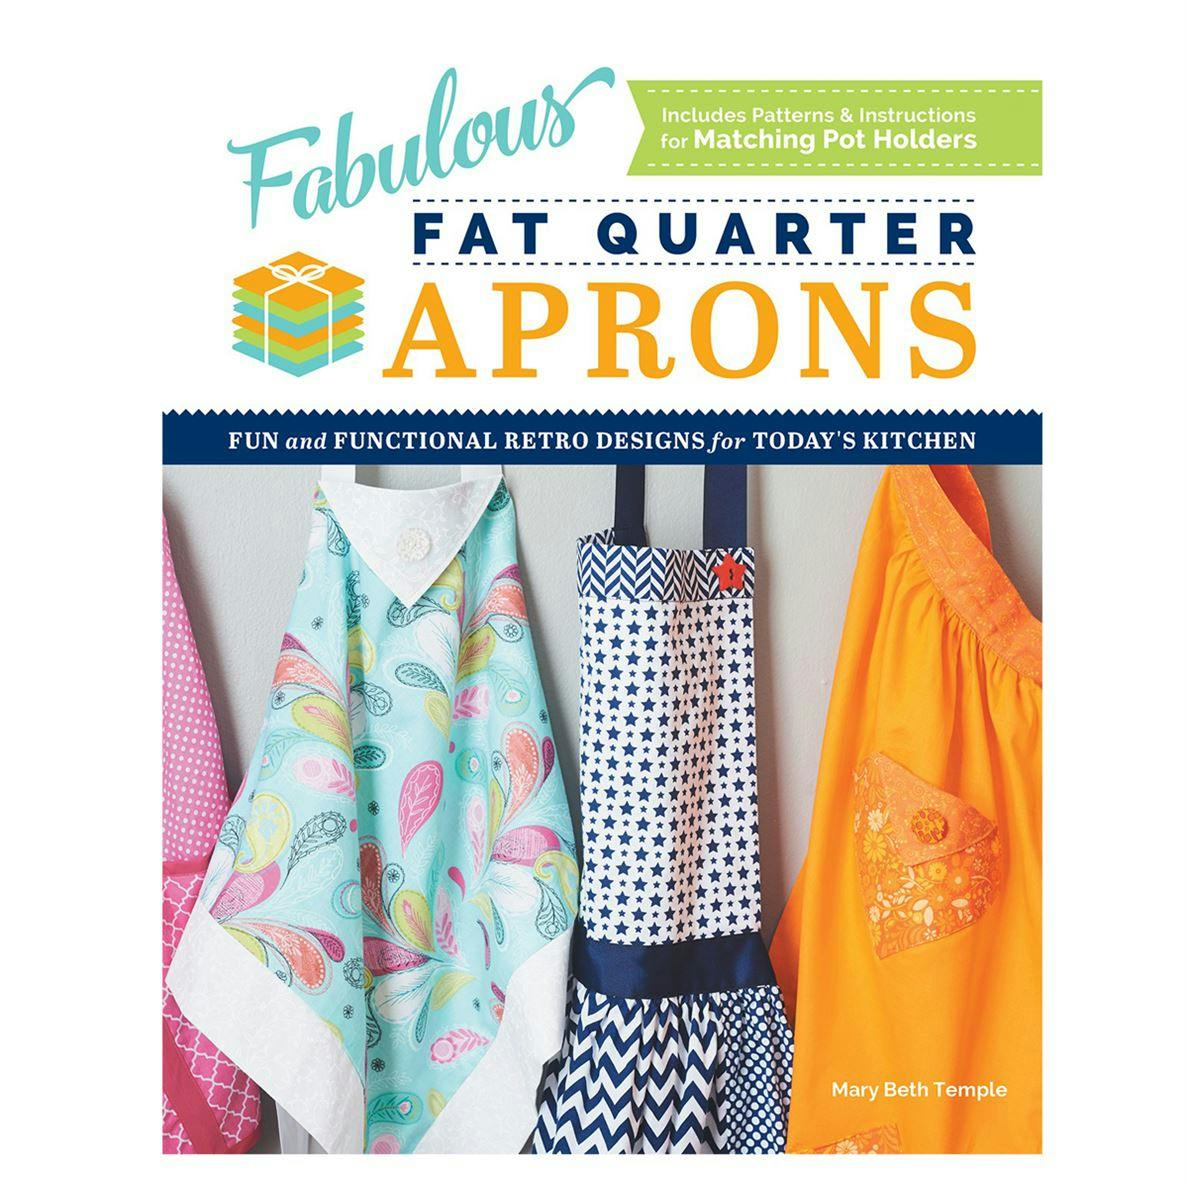 Cover of Fat Quarter Aprons book